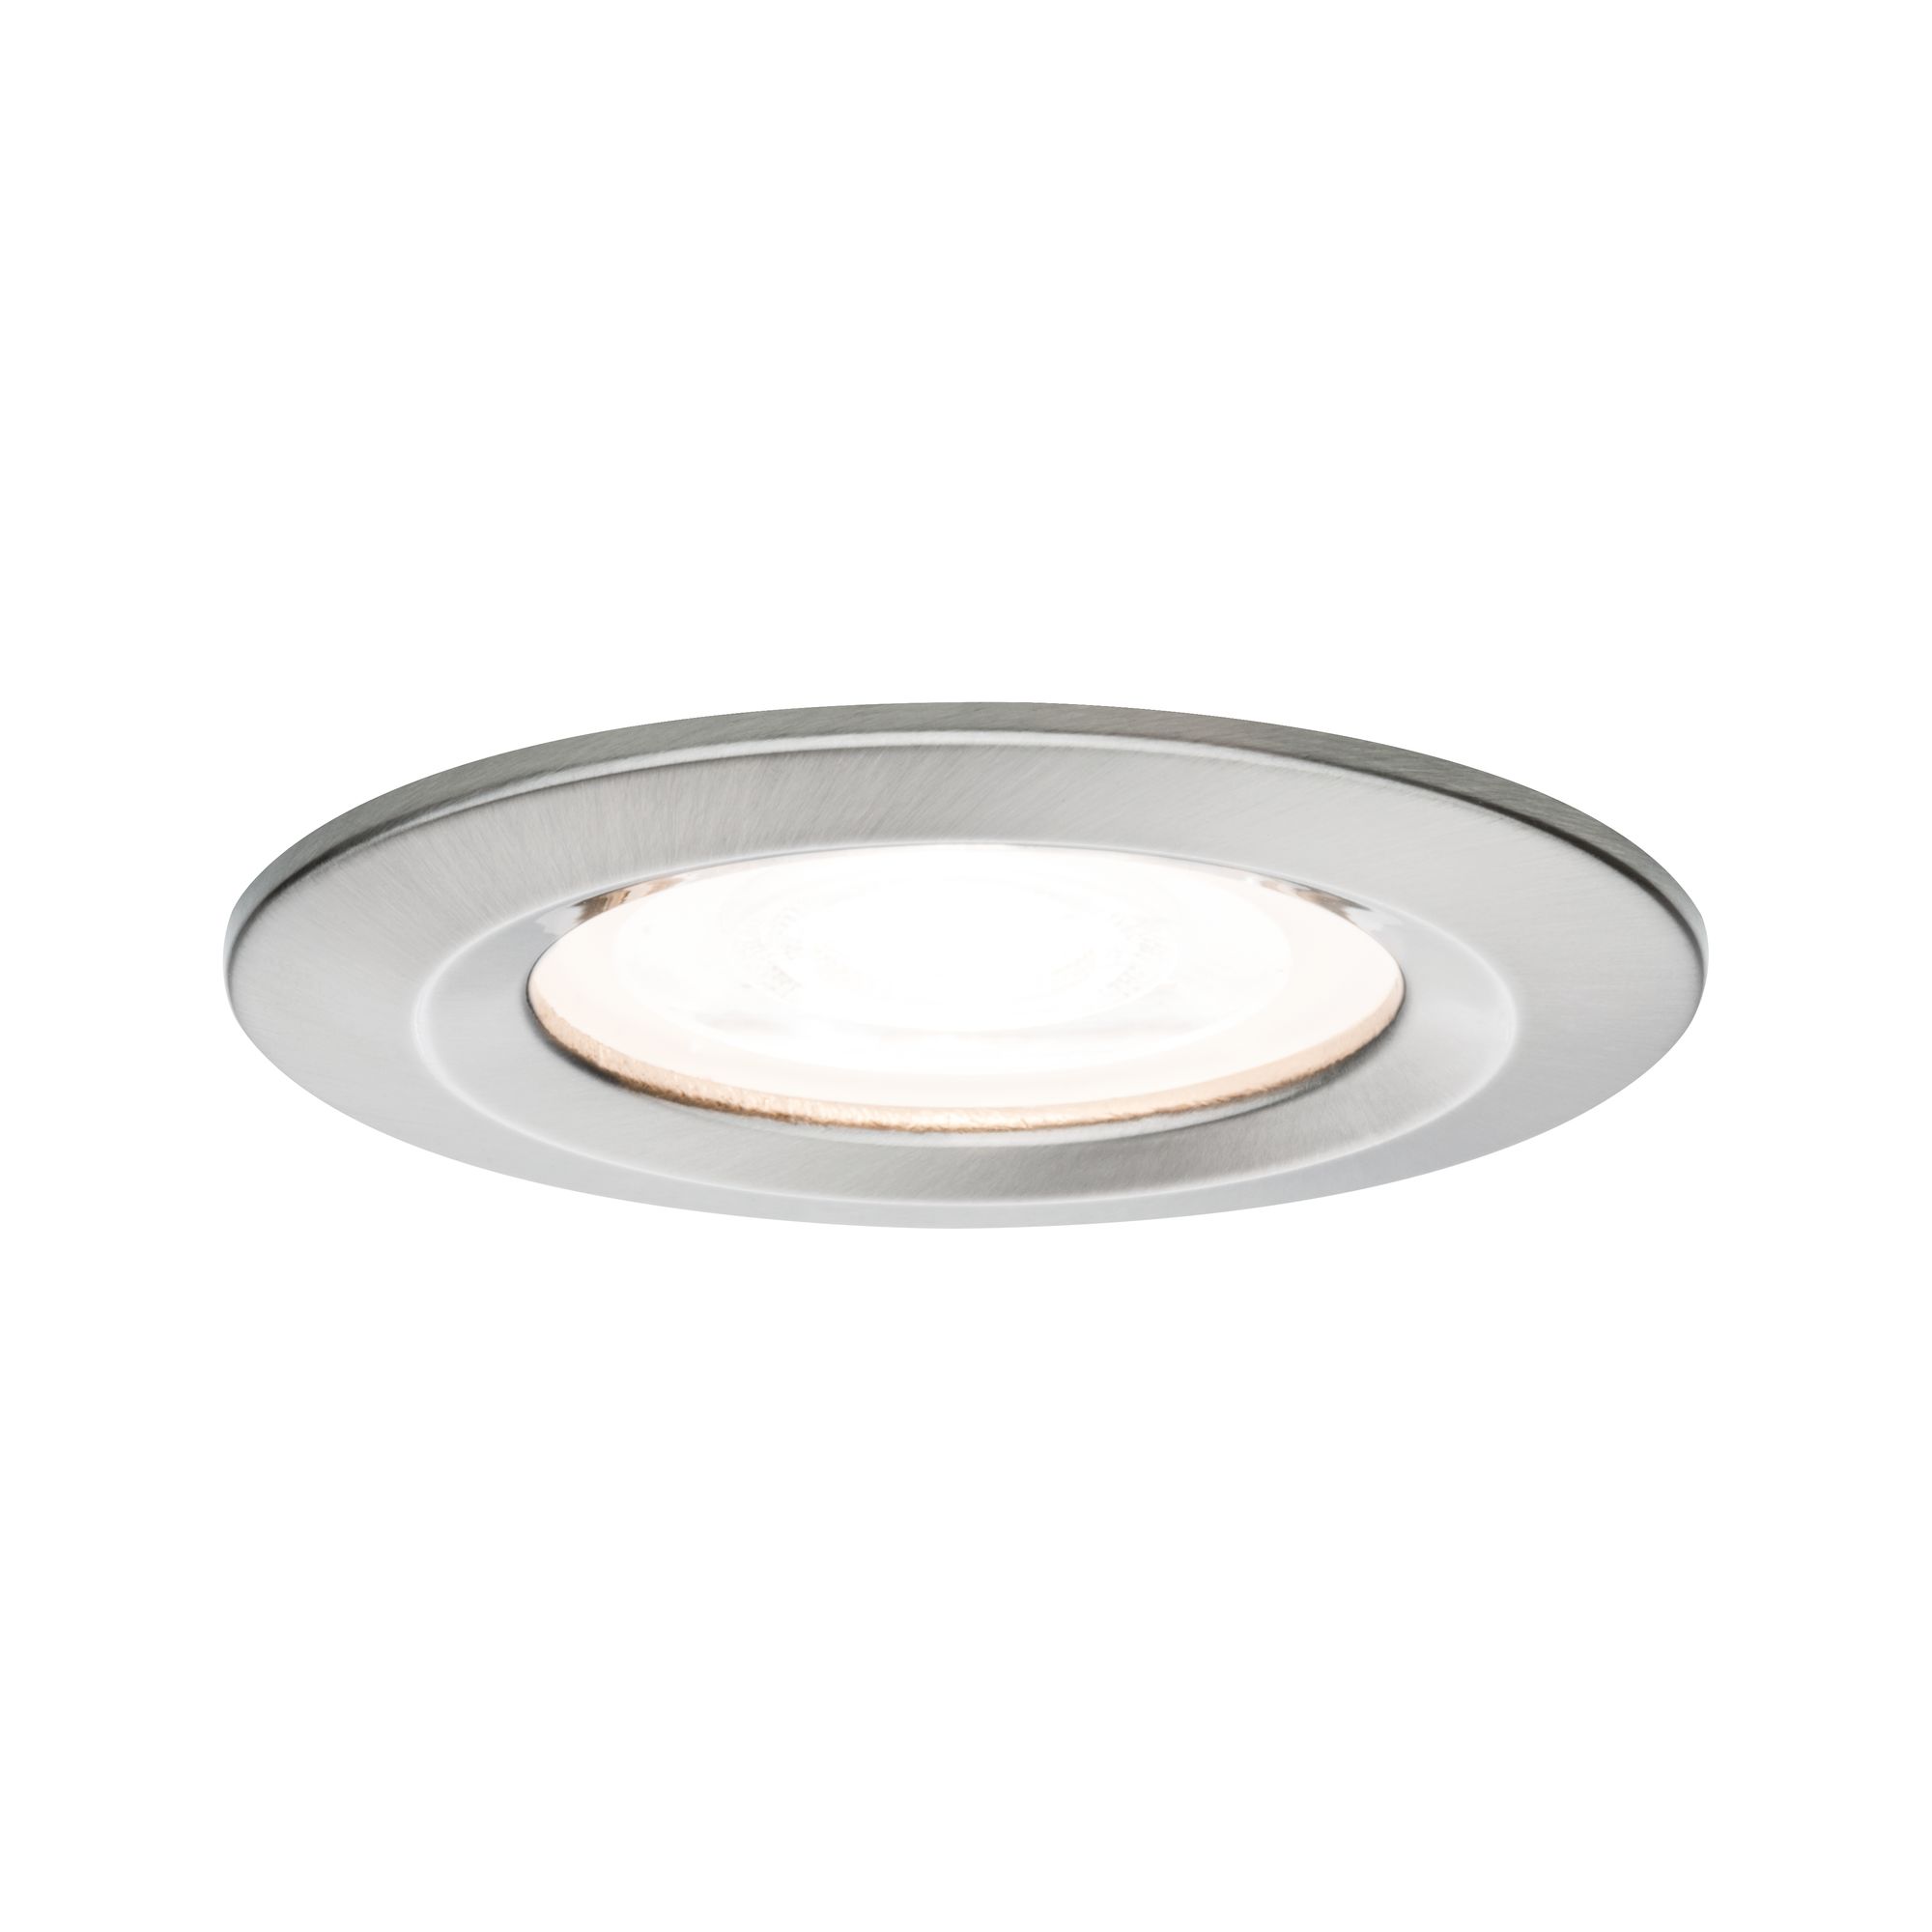 PAULMANN - Vestavné svítidlo LED Nova kruhové 1x6,5W GU10 kov kartáčovaný nevýklopné 3-krokové-stmívatelné, P 93475